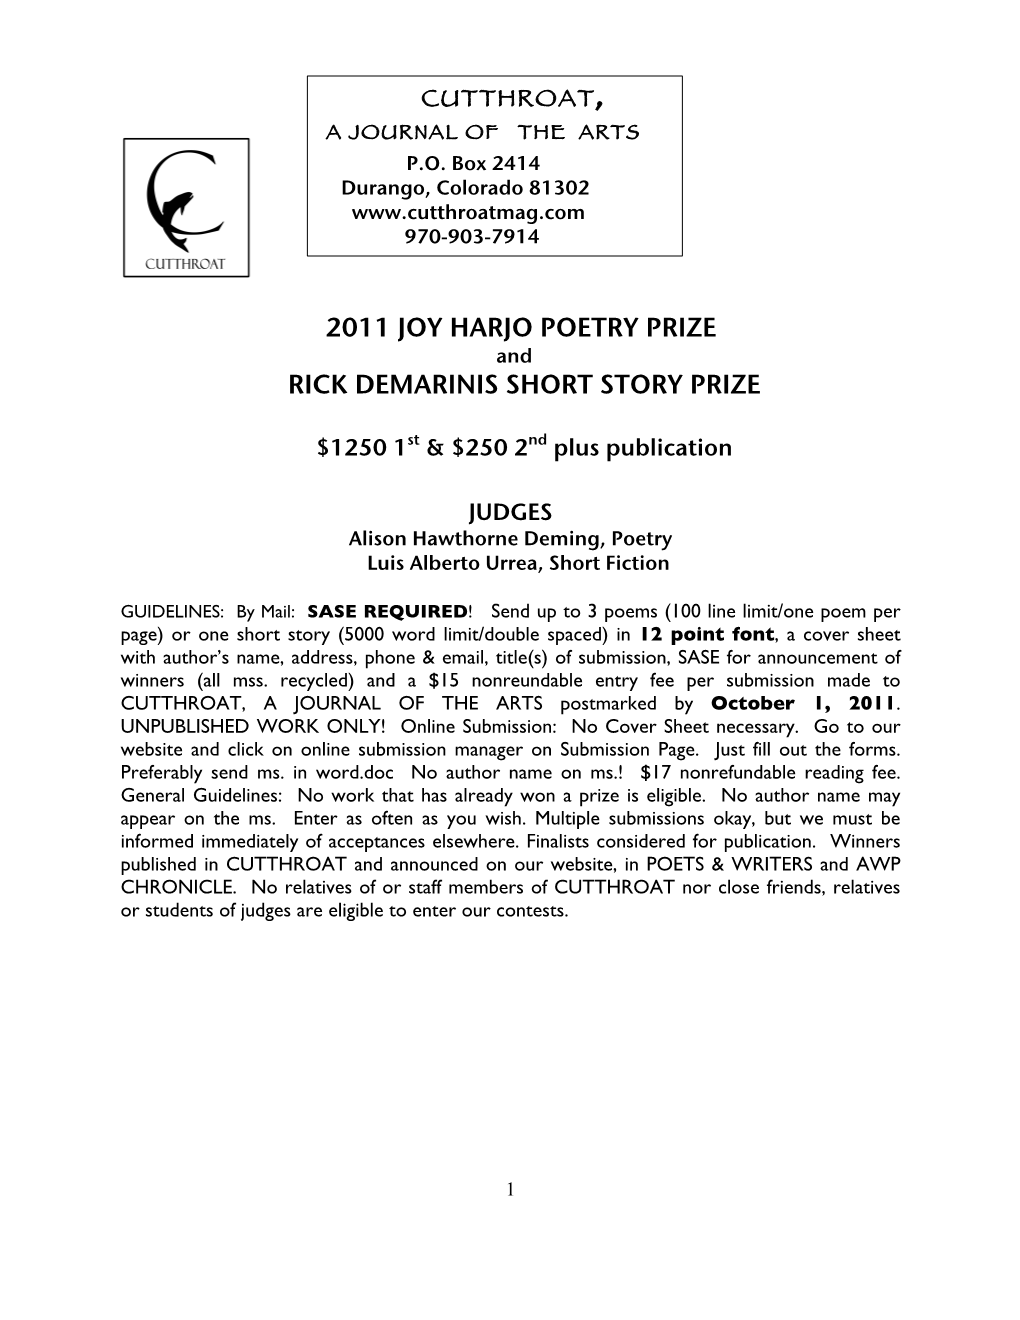 2011 Joy Harjo Poetry Prize Rick Demarinis Short Story